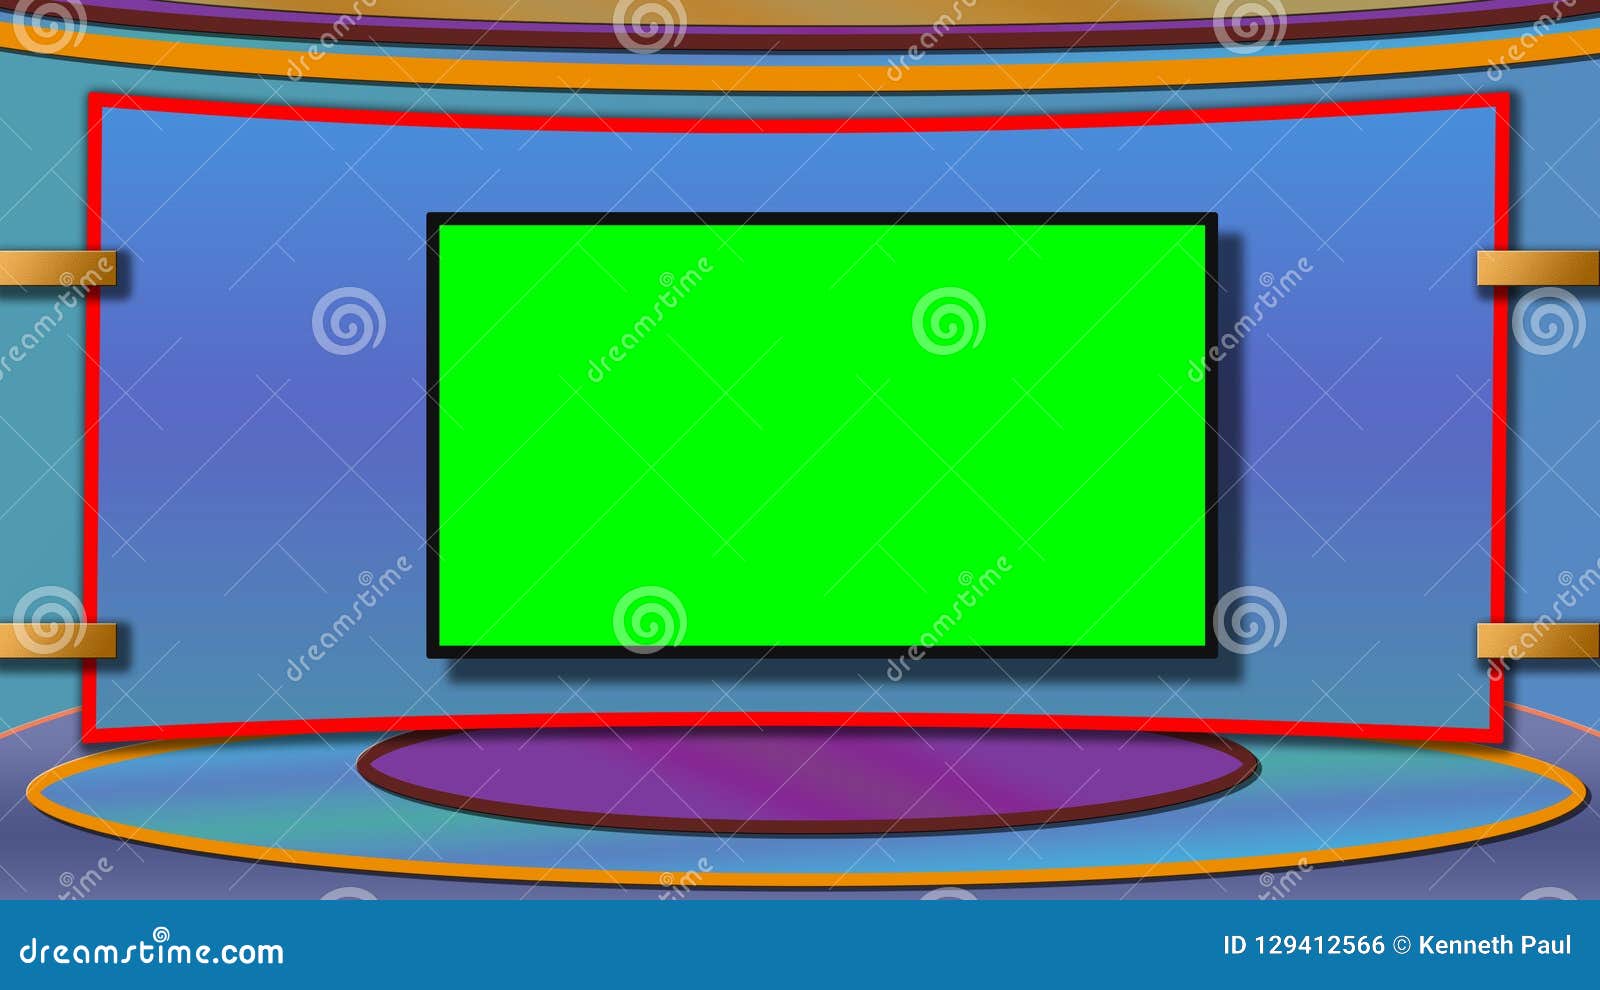 Tv News Studio Background With Greenscreen Stock Illustration Illustration Of Digital Modern